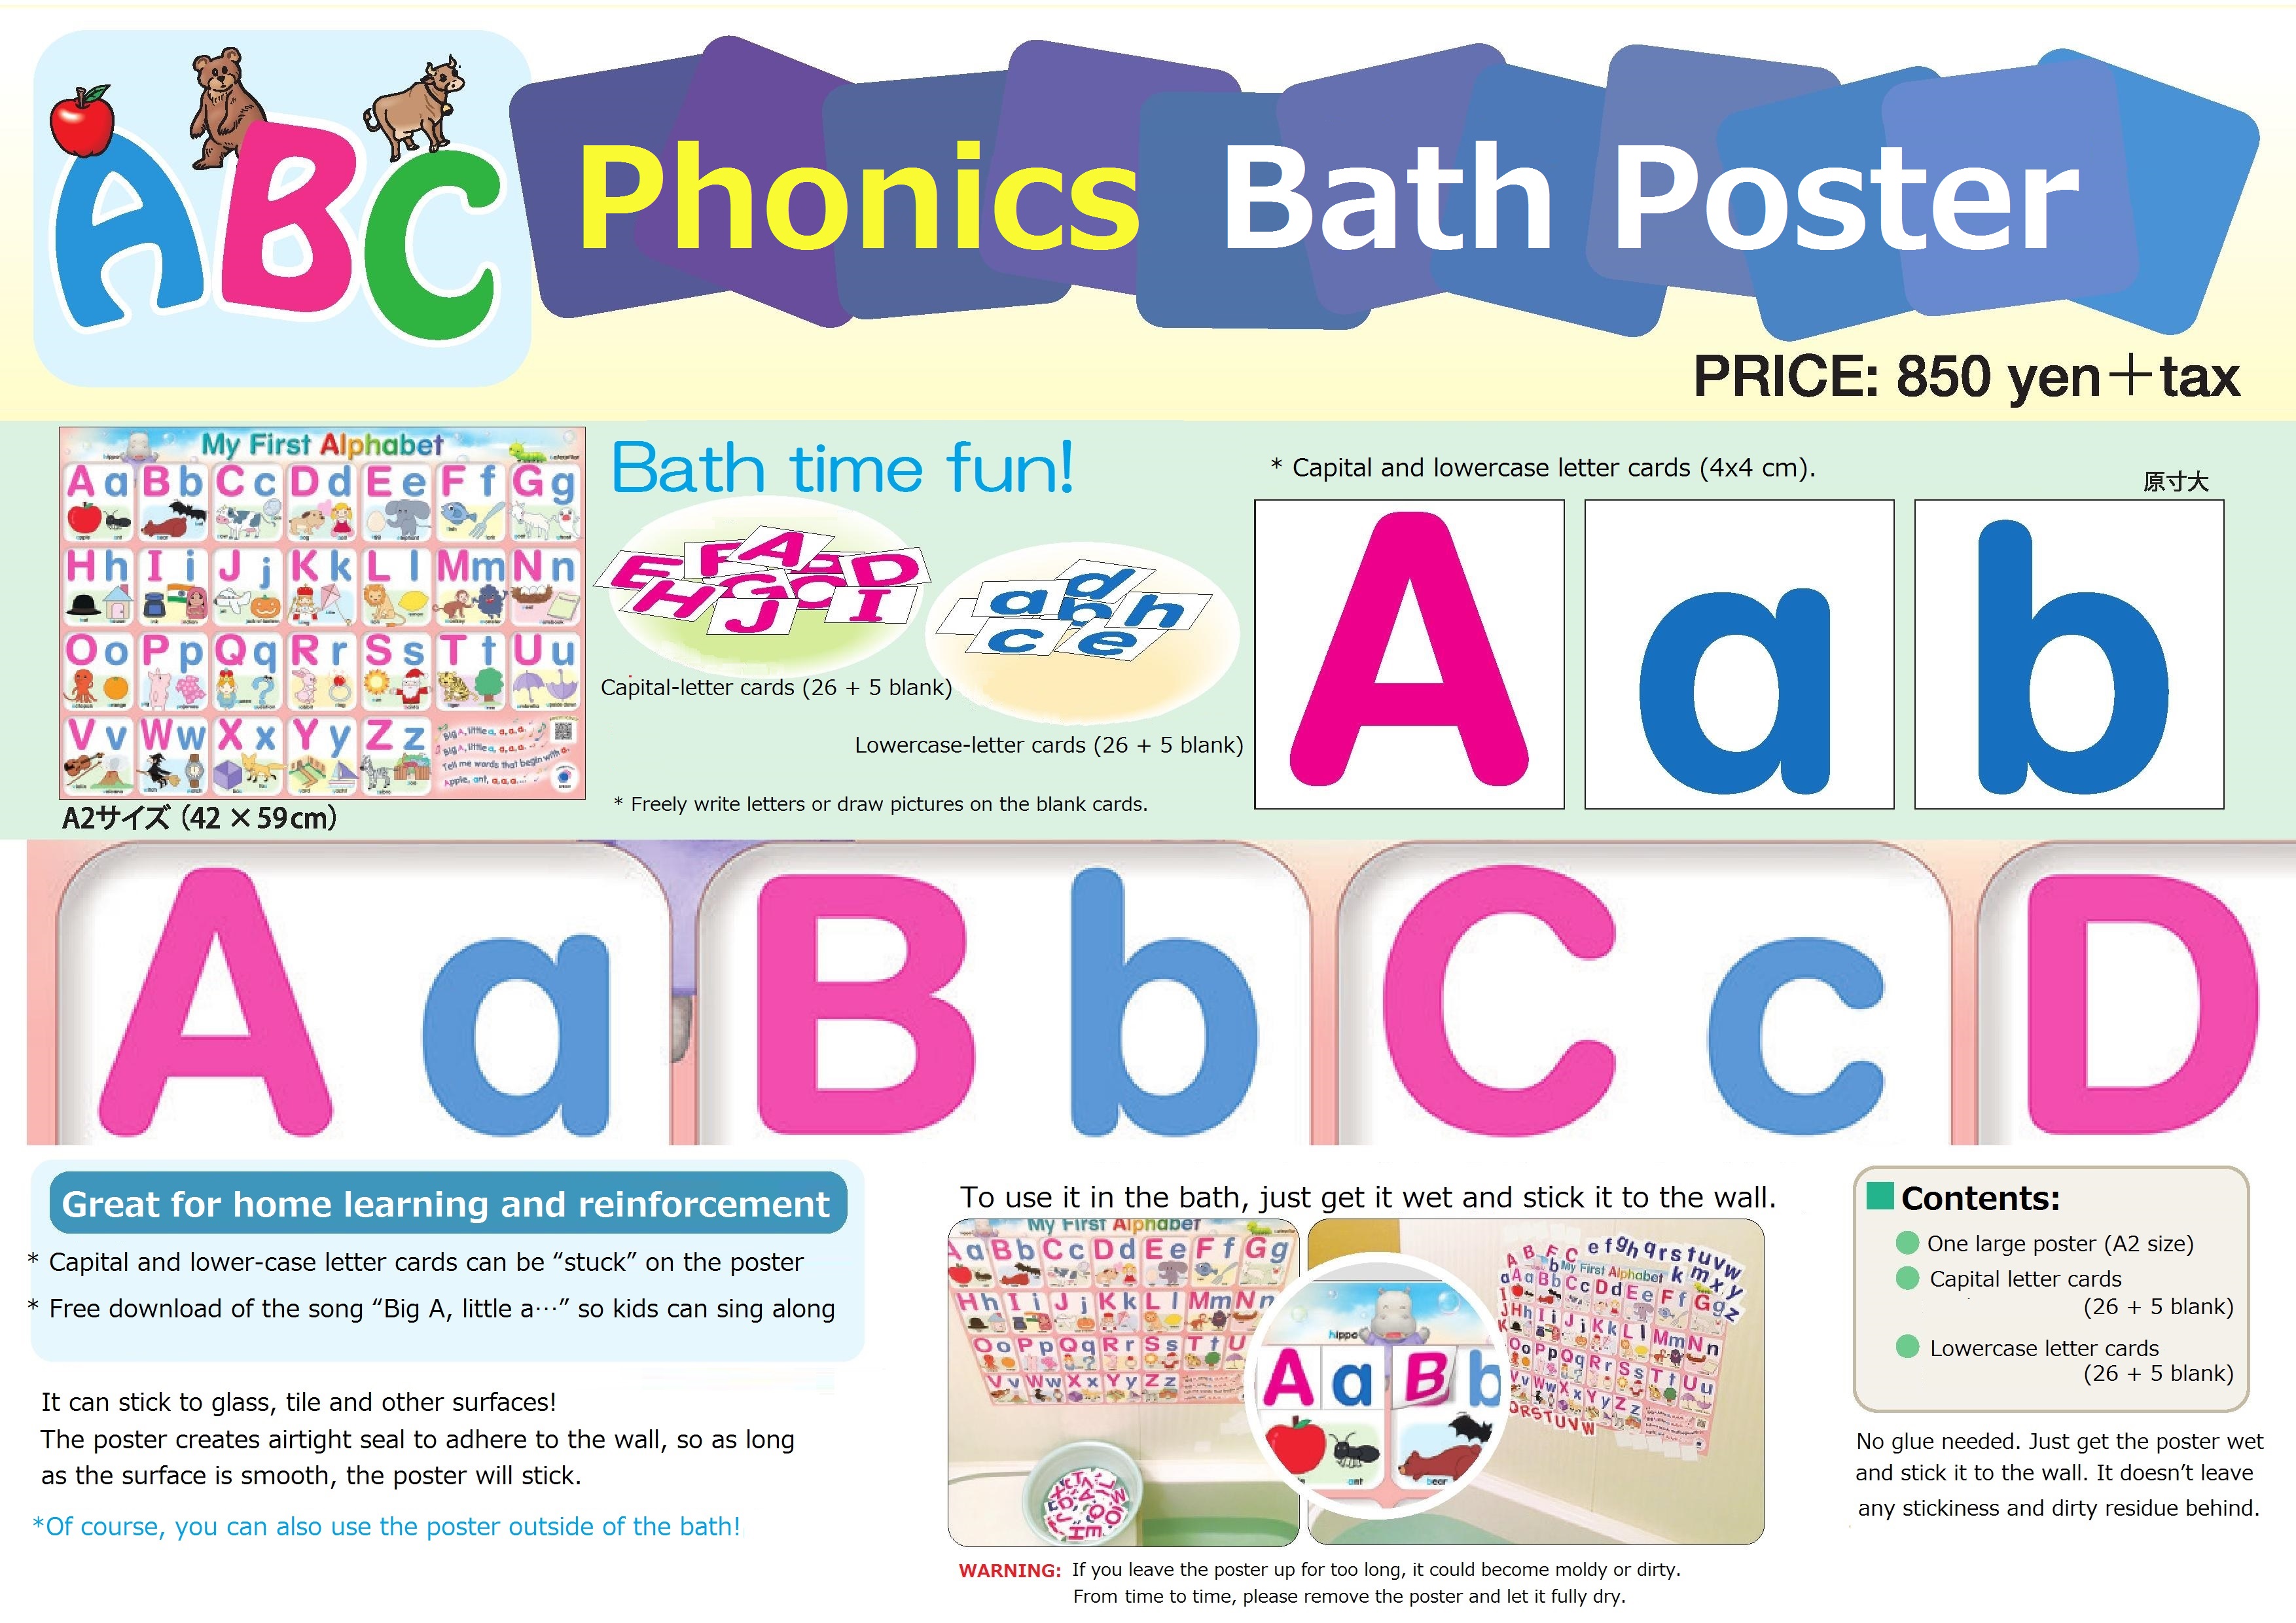 ABC Phonics Bath Poster